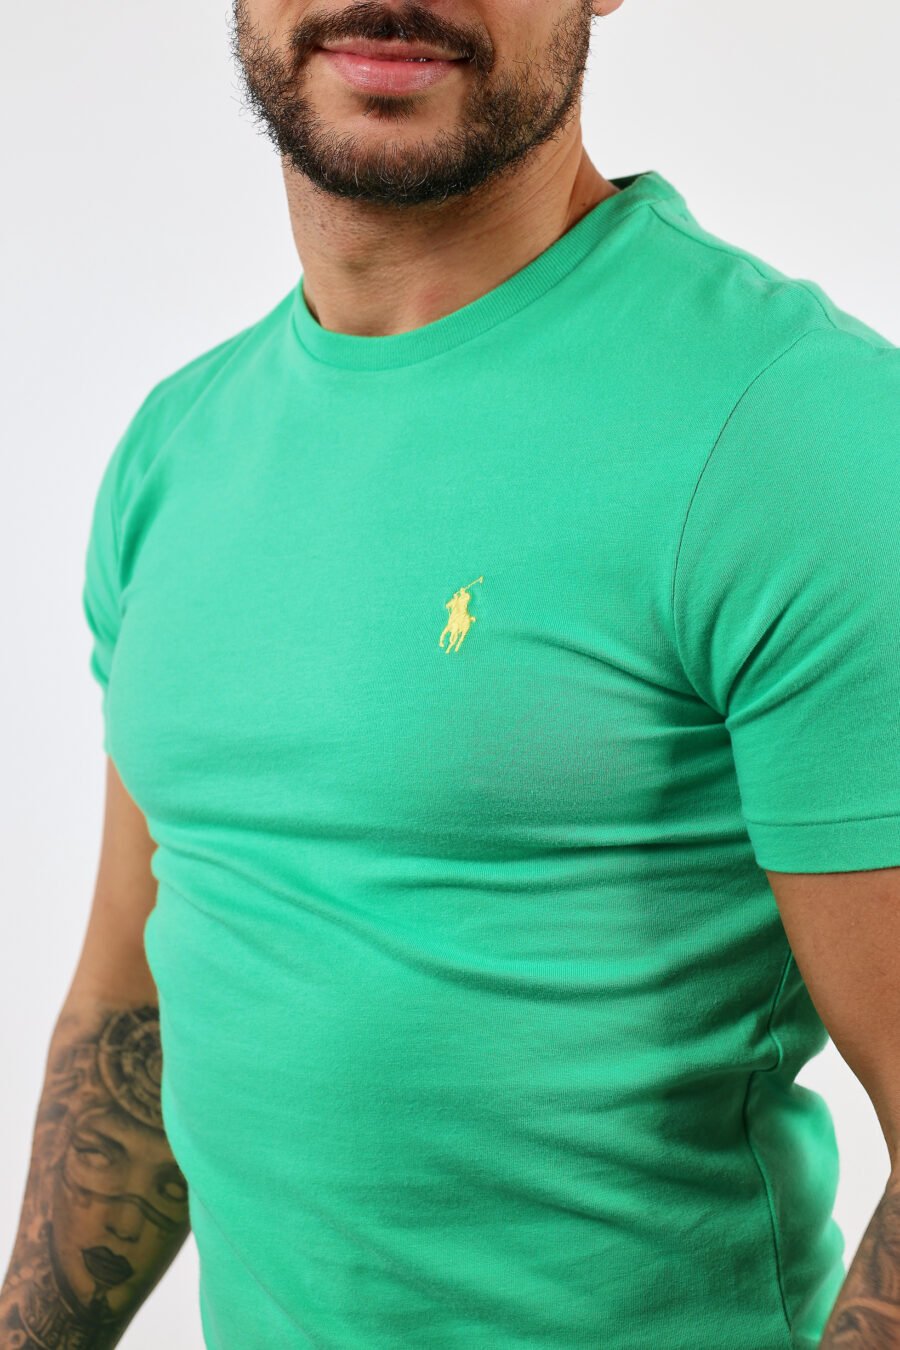 Grünes und gelbes T-Shirt mit Mini-Logo "Polo" - BLS Fashion 303